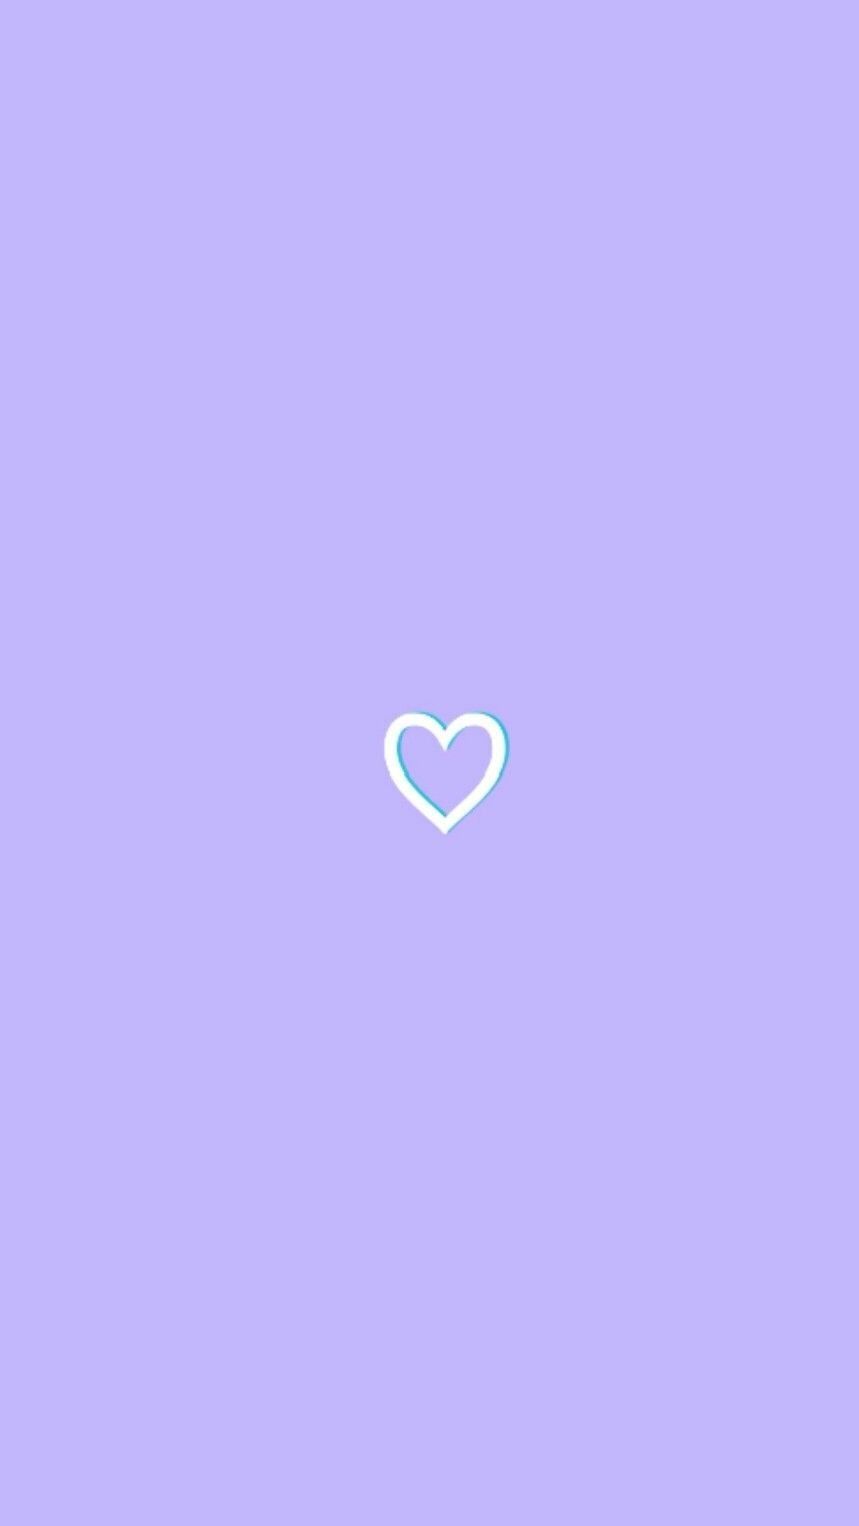 A heart shaped icon on purple background - Heart, light purple, pastel purple